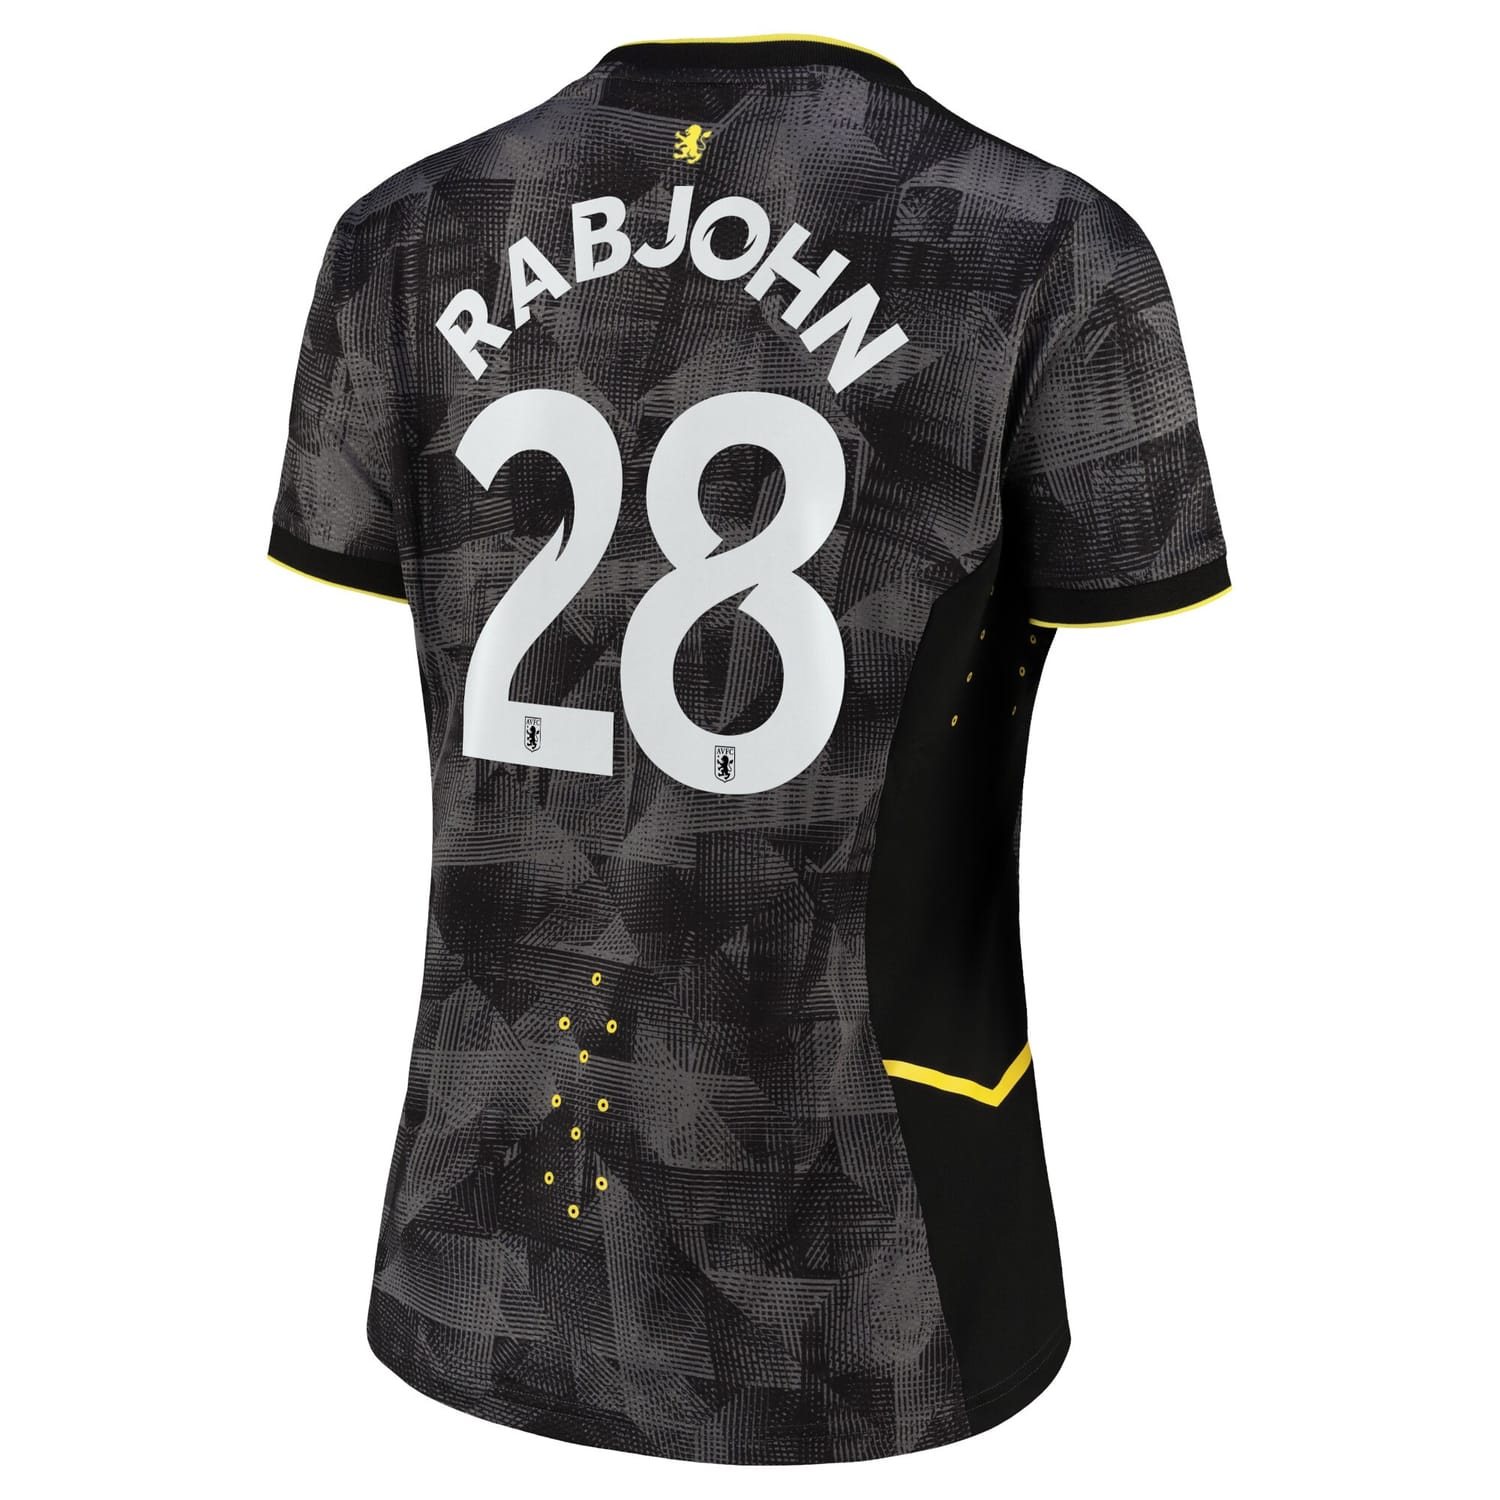 Premier League Aston Villa Third Cup Pro Jersey Shirt 2022-23 player Evie Rabjohn 28 printing for Women